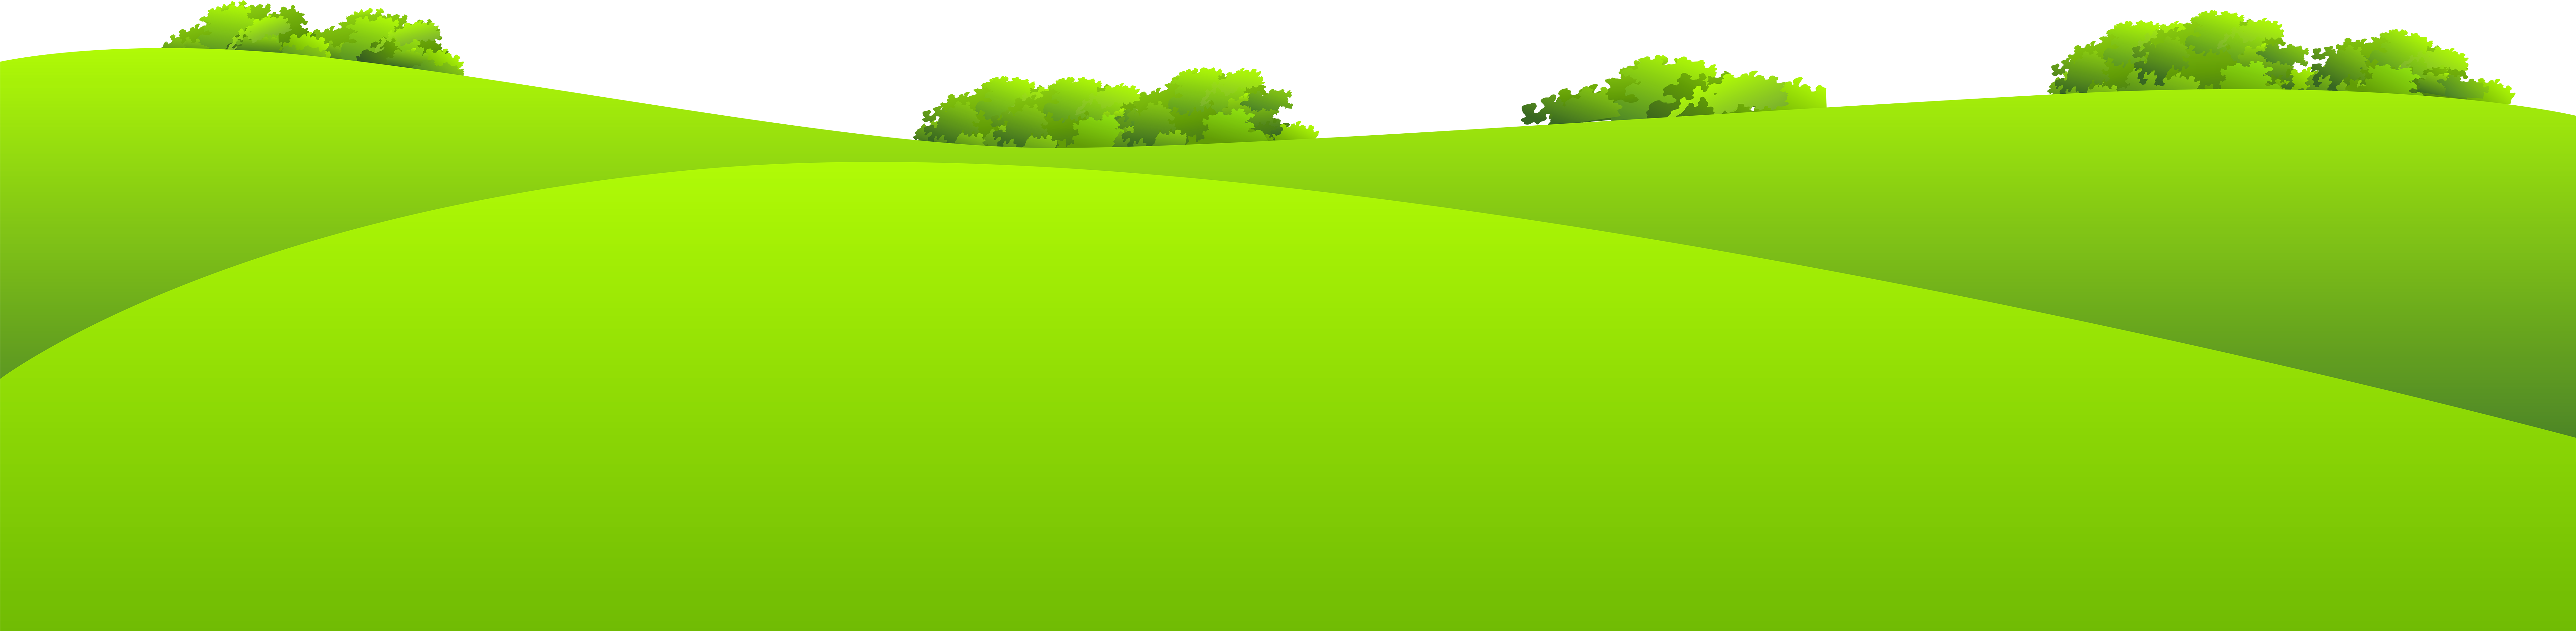 Vibrant Green Hills Meadow PNG